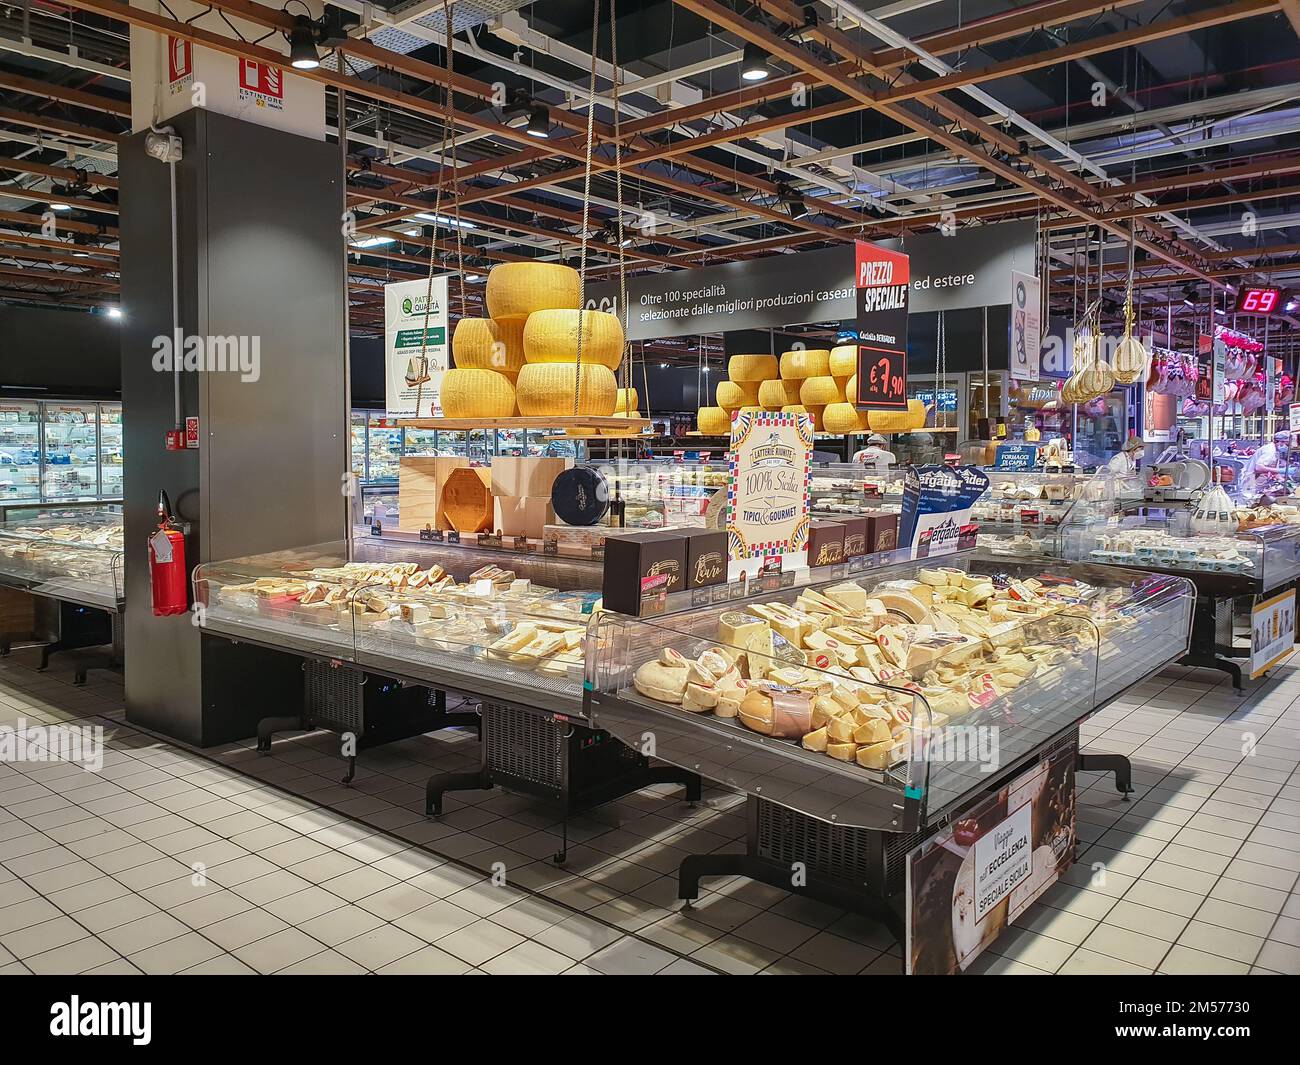 https://c8.alamy.com/comp/2M57730/bergamo-italy-april-29-2022-food-selection-in-italian-iper-supermarket-cheese-display-2M57730.jpg